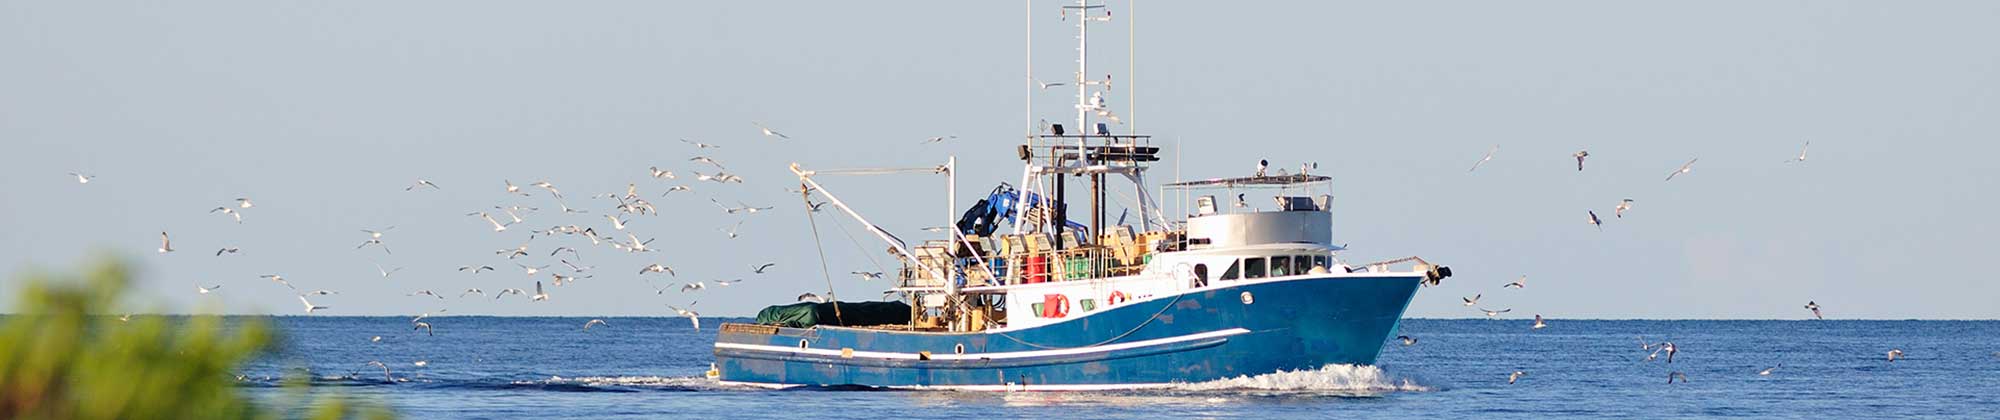 A shrimp boat shrimping